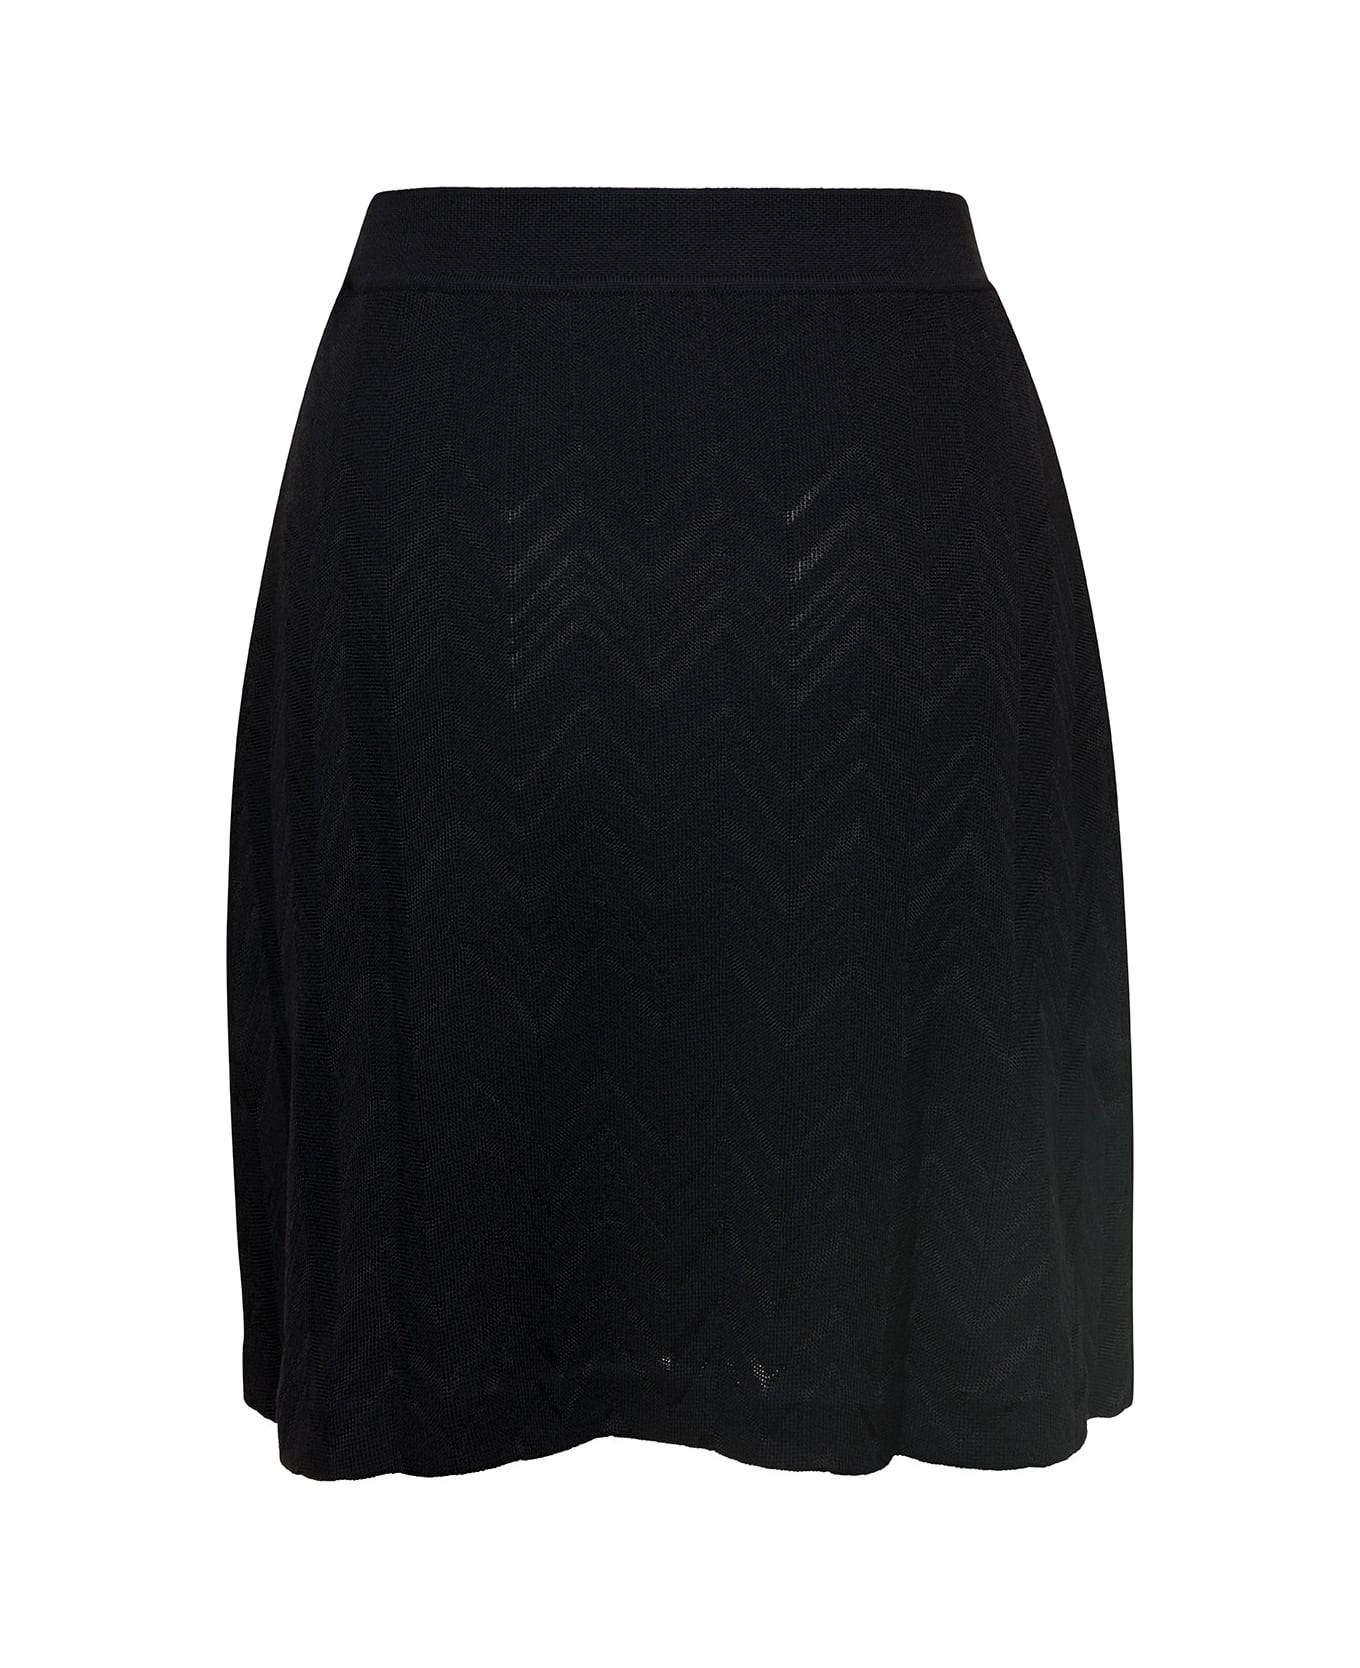 Missoni Wool Viscose Solid Colored Chevron Mini Skirt - Nero スカート